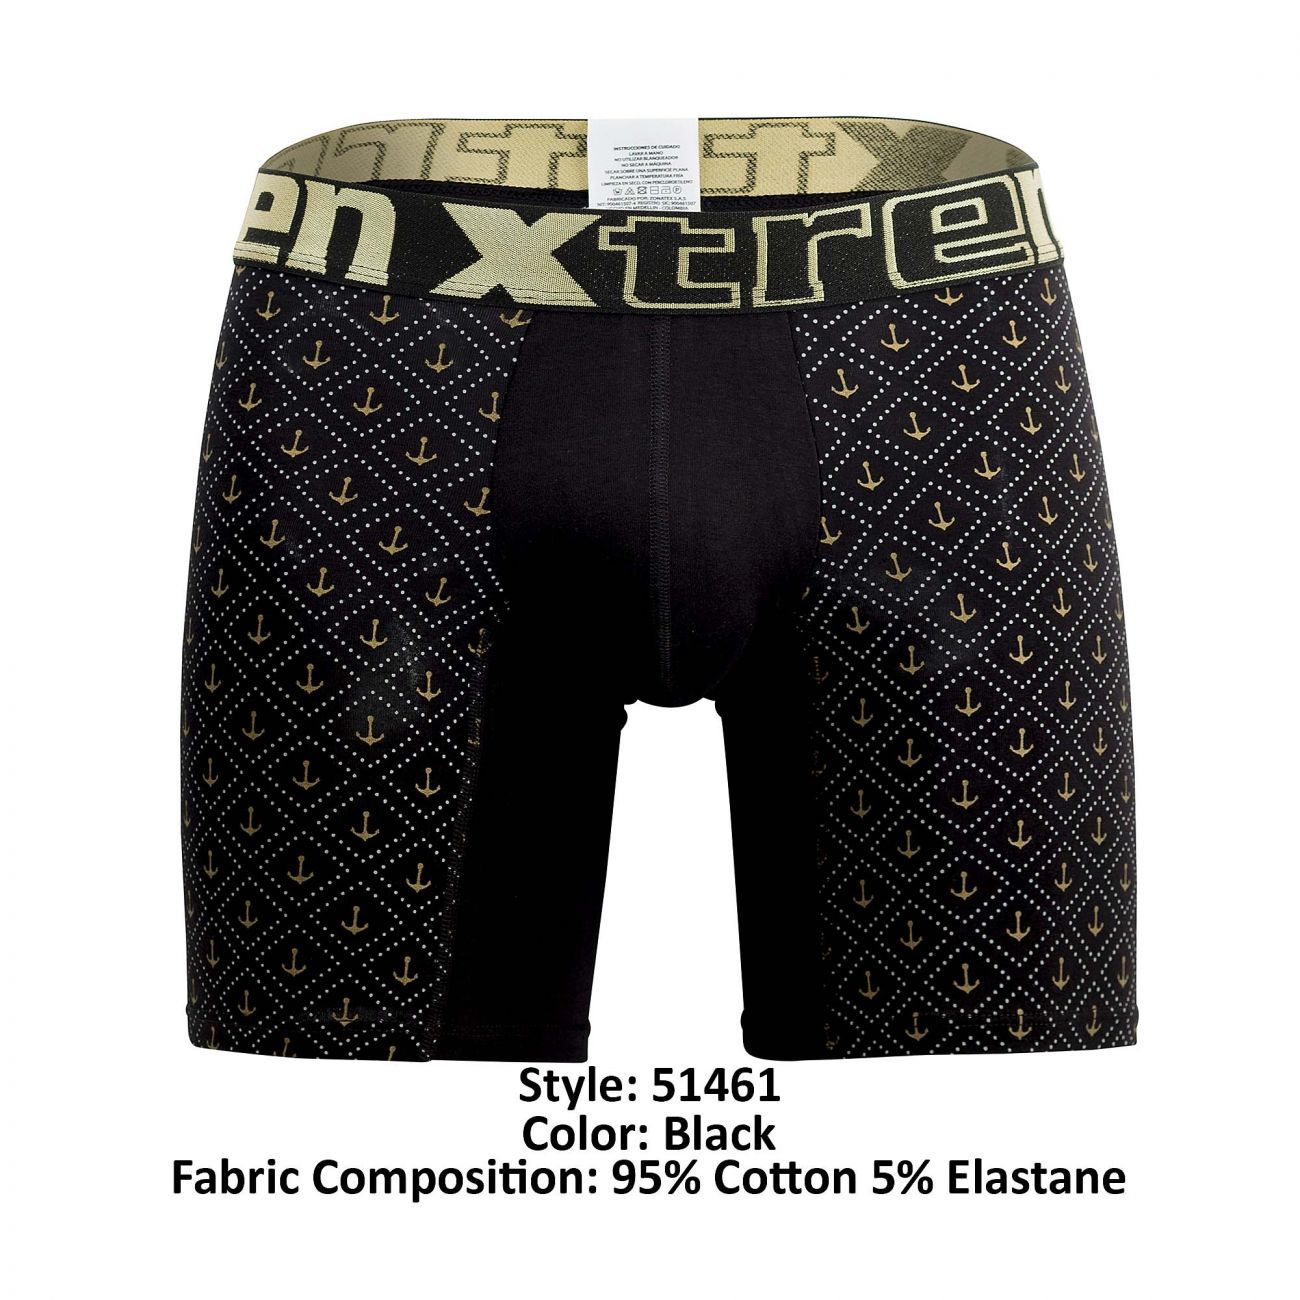 Xtremen 51461 Cotton Boxer Briefs